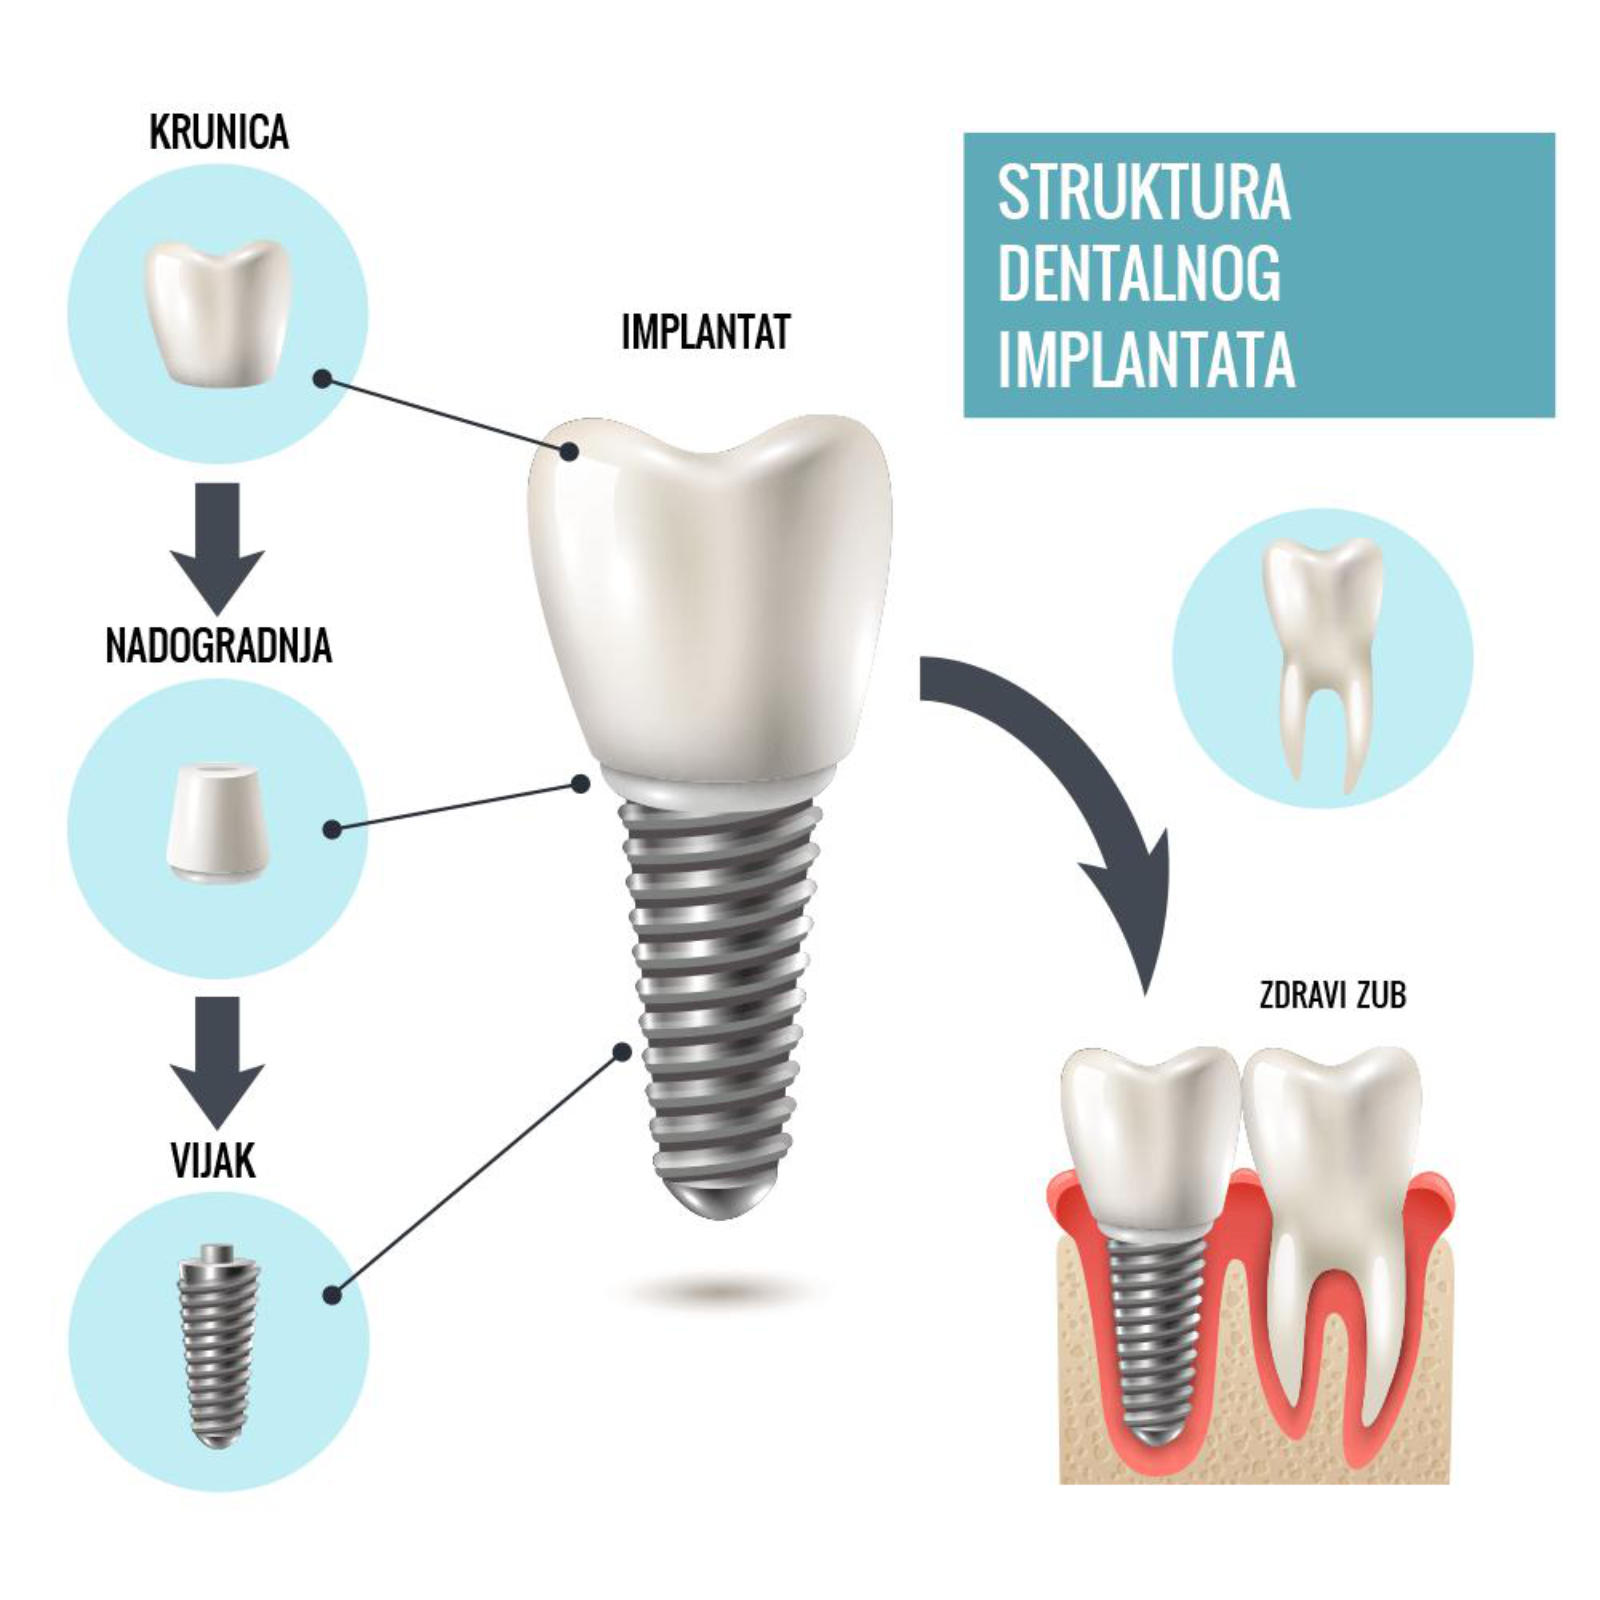 https://ars-dentalis.com/wp-content/uploads/2020/11/implantati-1.jpg